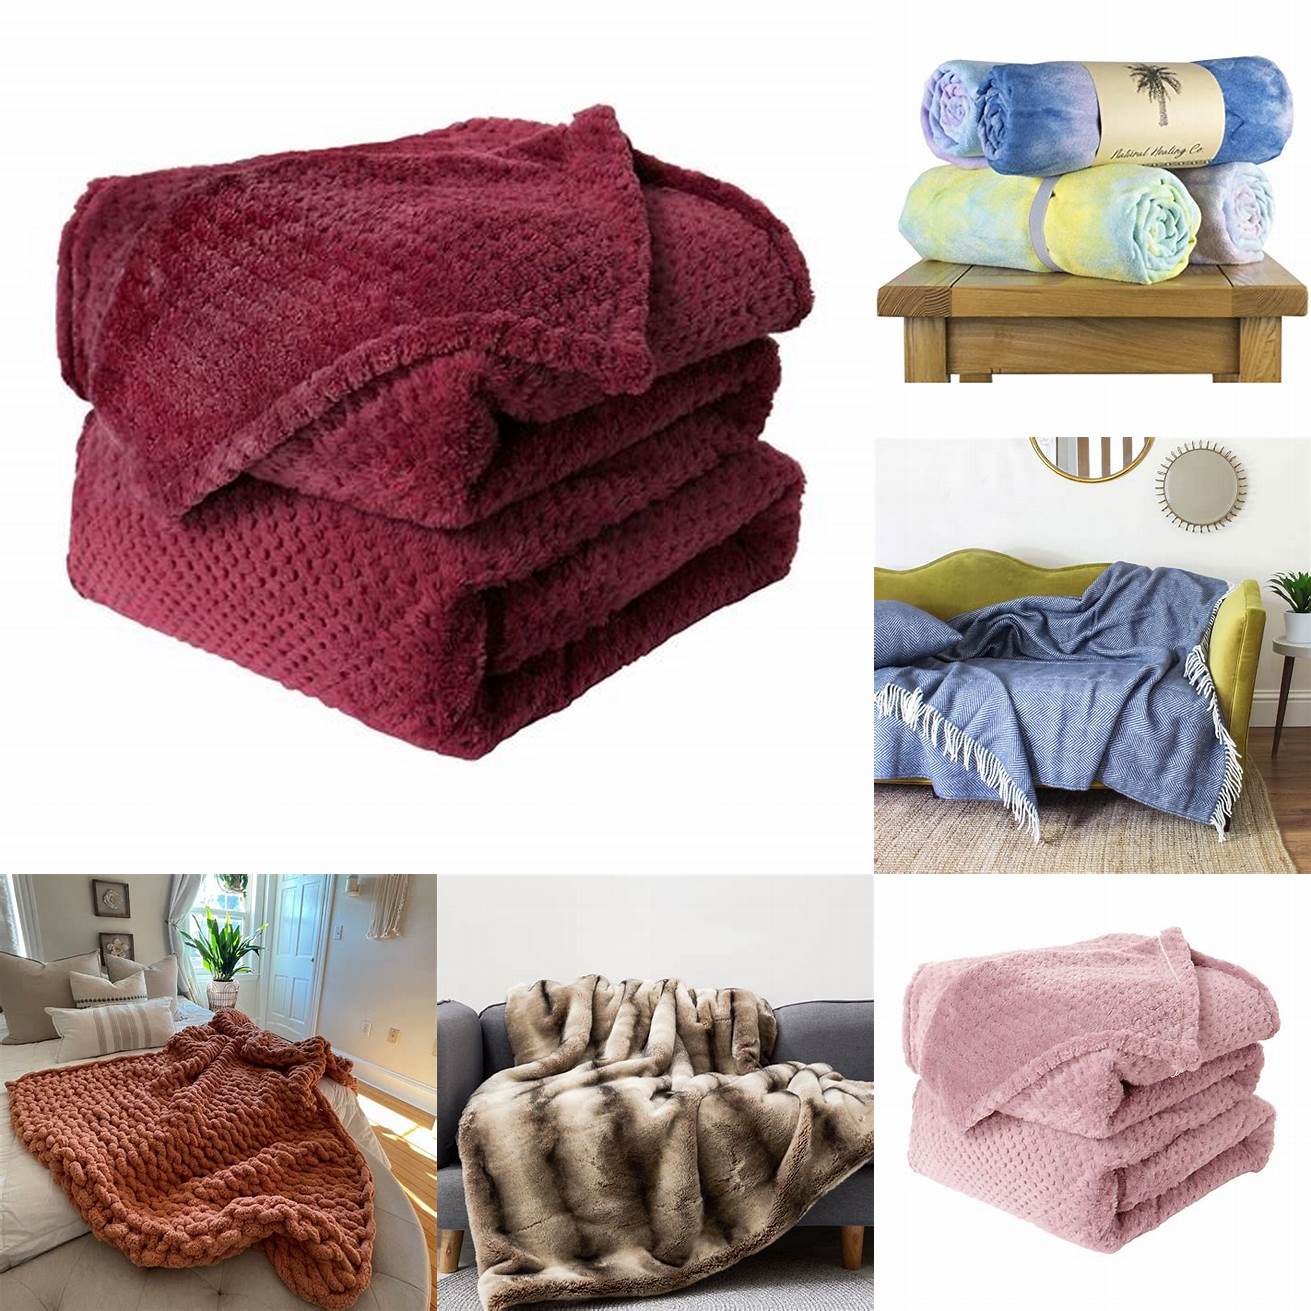 Large Blanket or Towel